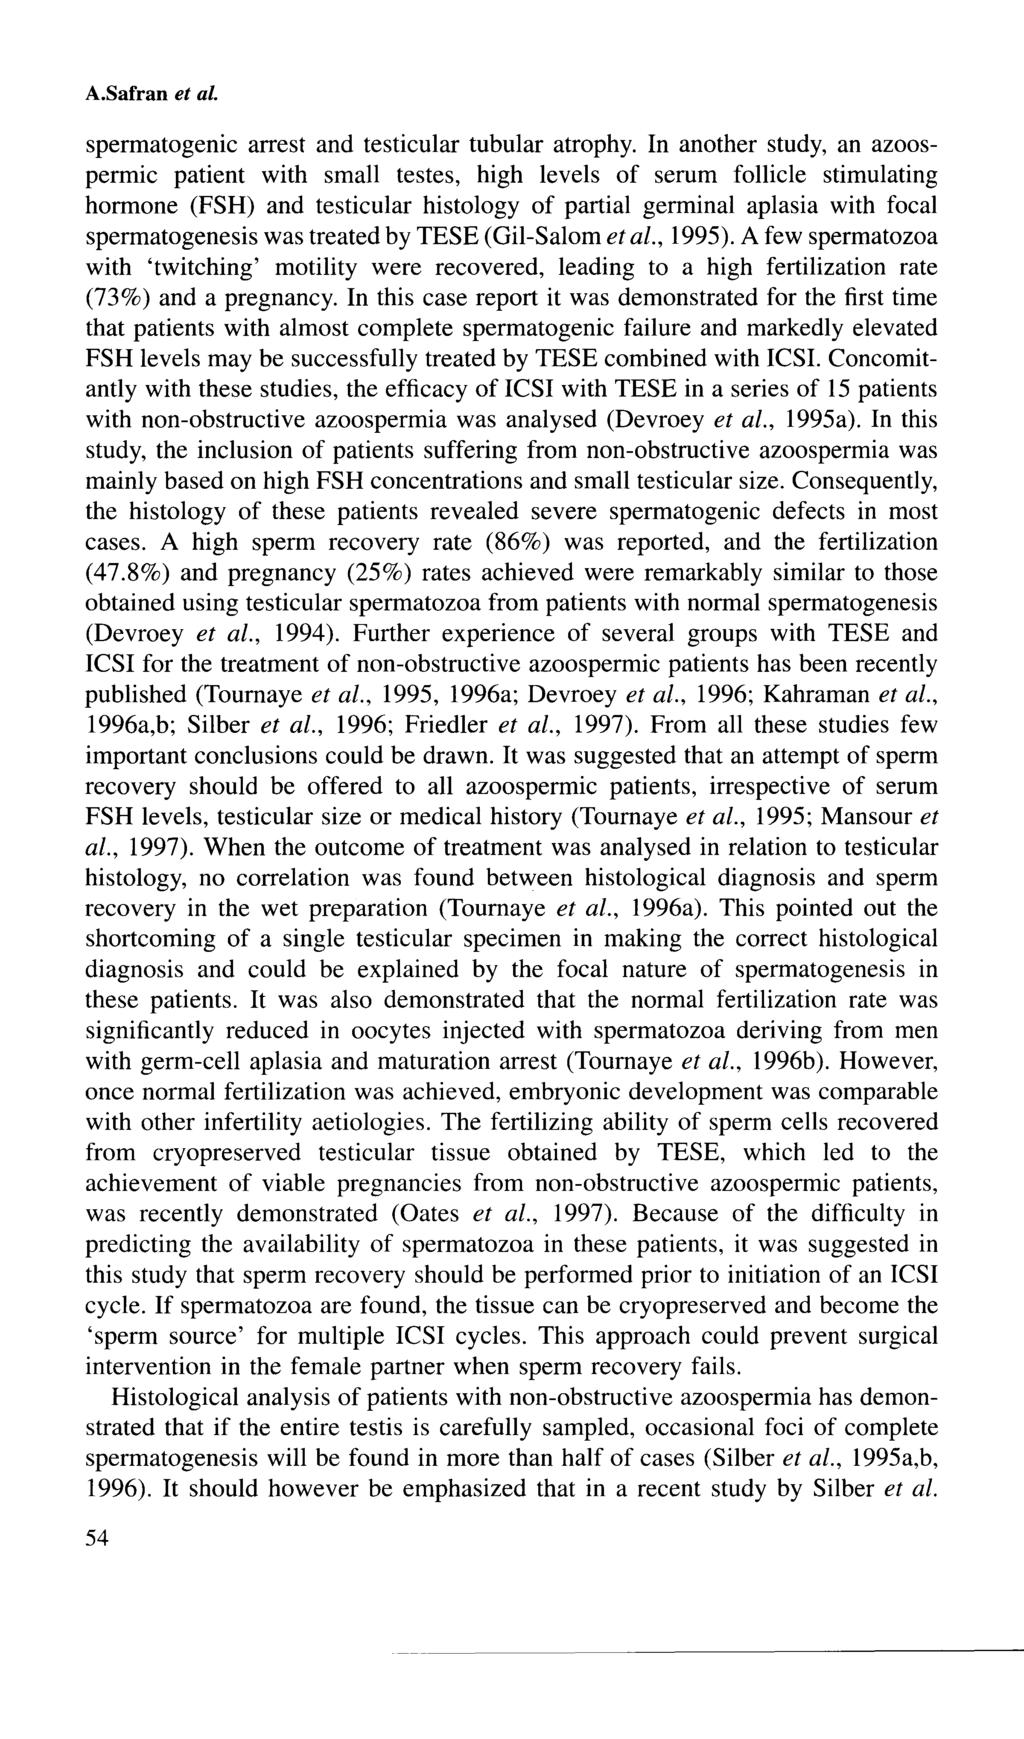 A.Safran et al. spermatogenic arrest and testicular tubular atrophy.